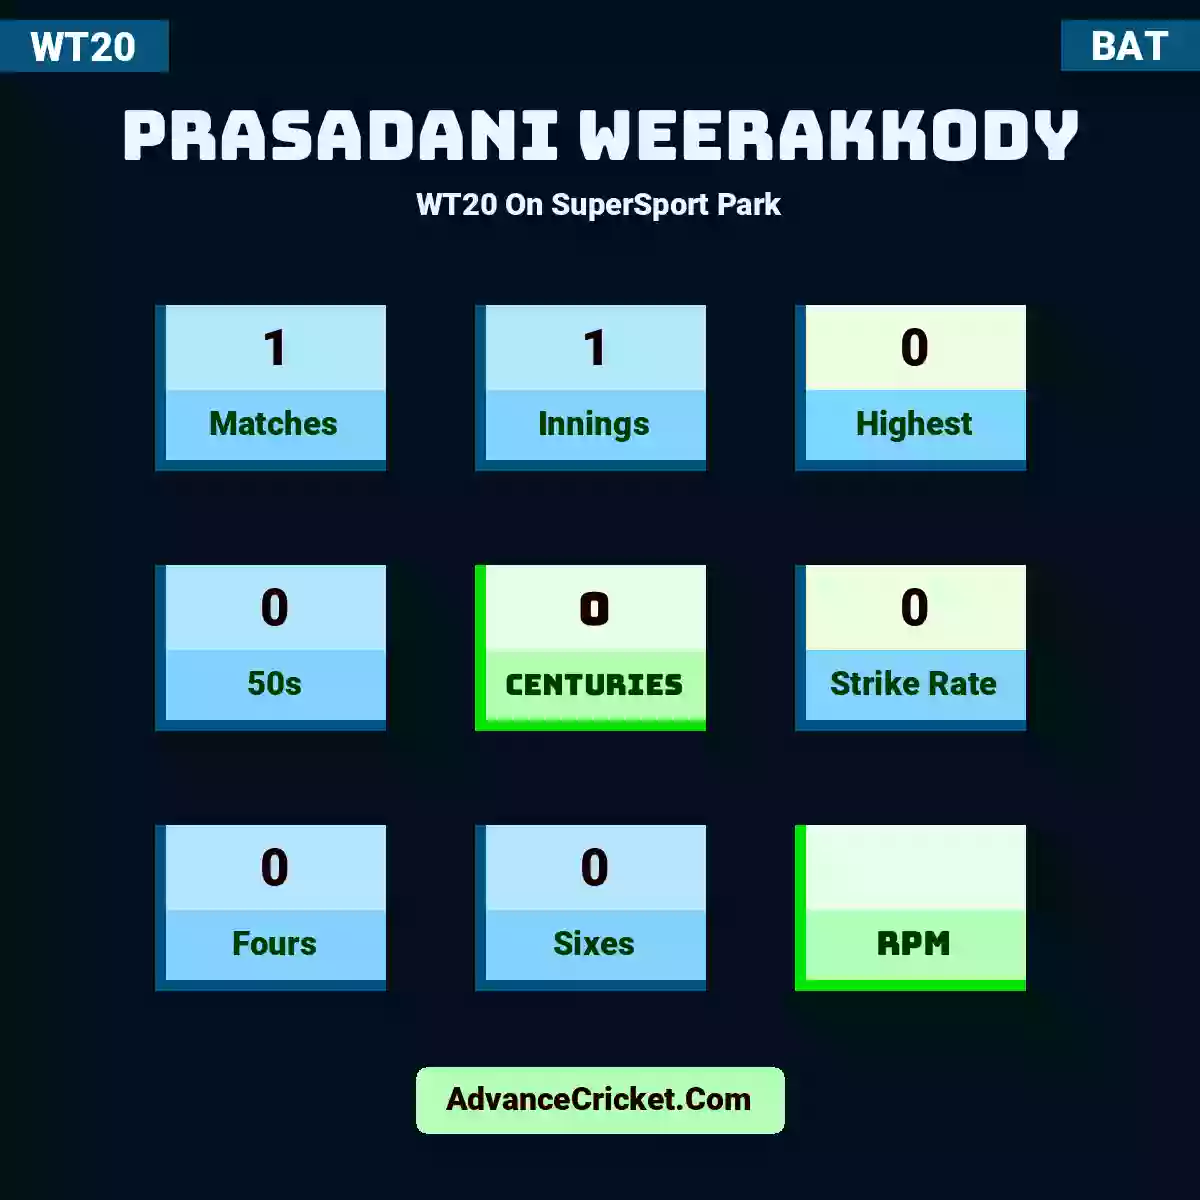 Prasadani Weerakkody WT20  On SuperSport Park, Prasadani Weerakkody played 1 matches, scored 0 runs as highest, 0 half-centuries, and 0 centuries, with a strike rate of 0. P.Weerakkody hit 0 fours and 0 sixes.